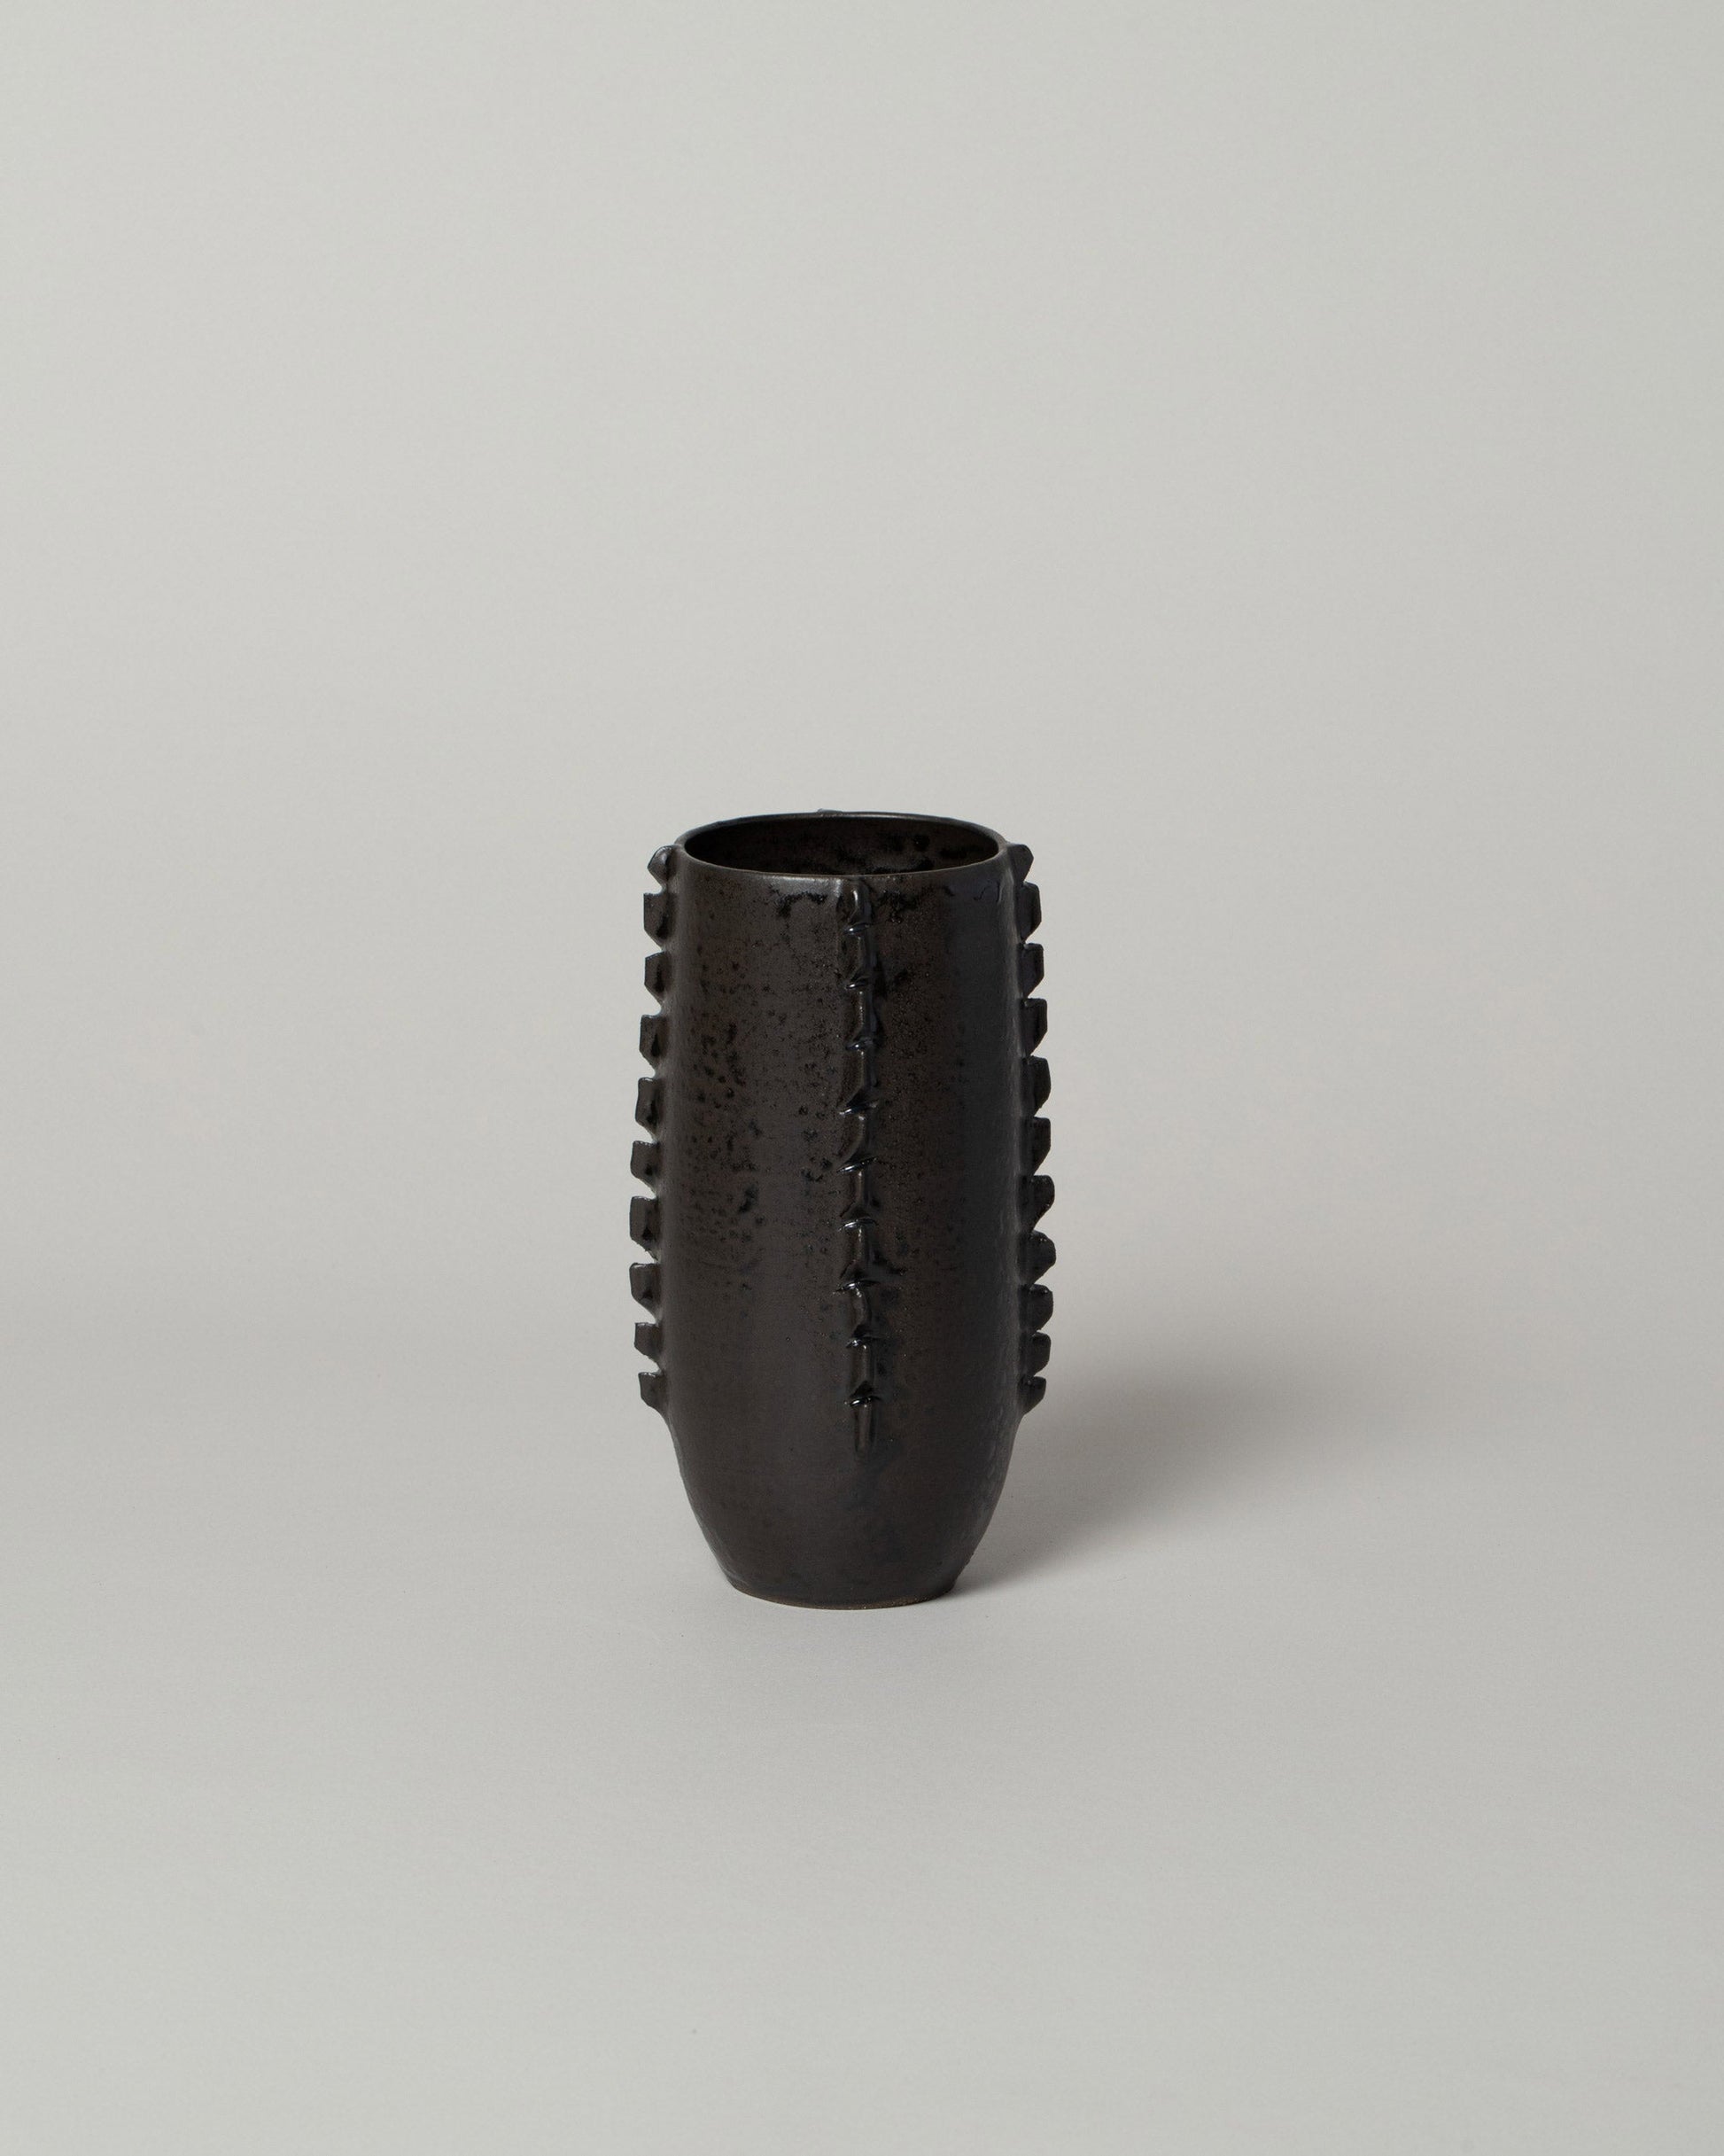  Little Bear Pots Small Black Sawtooth Vase on light color background.